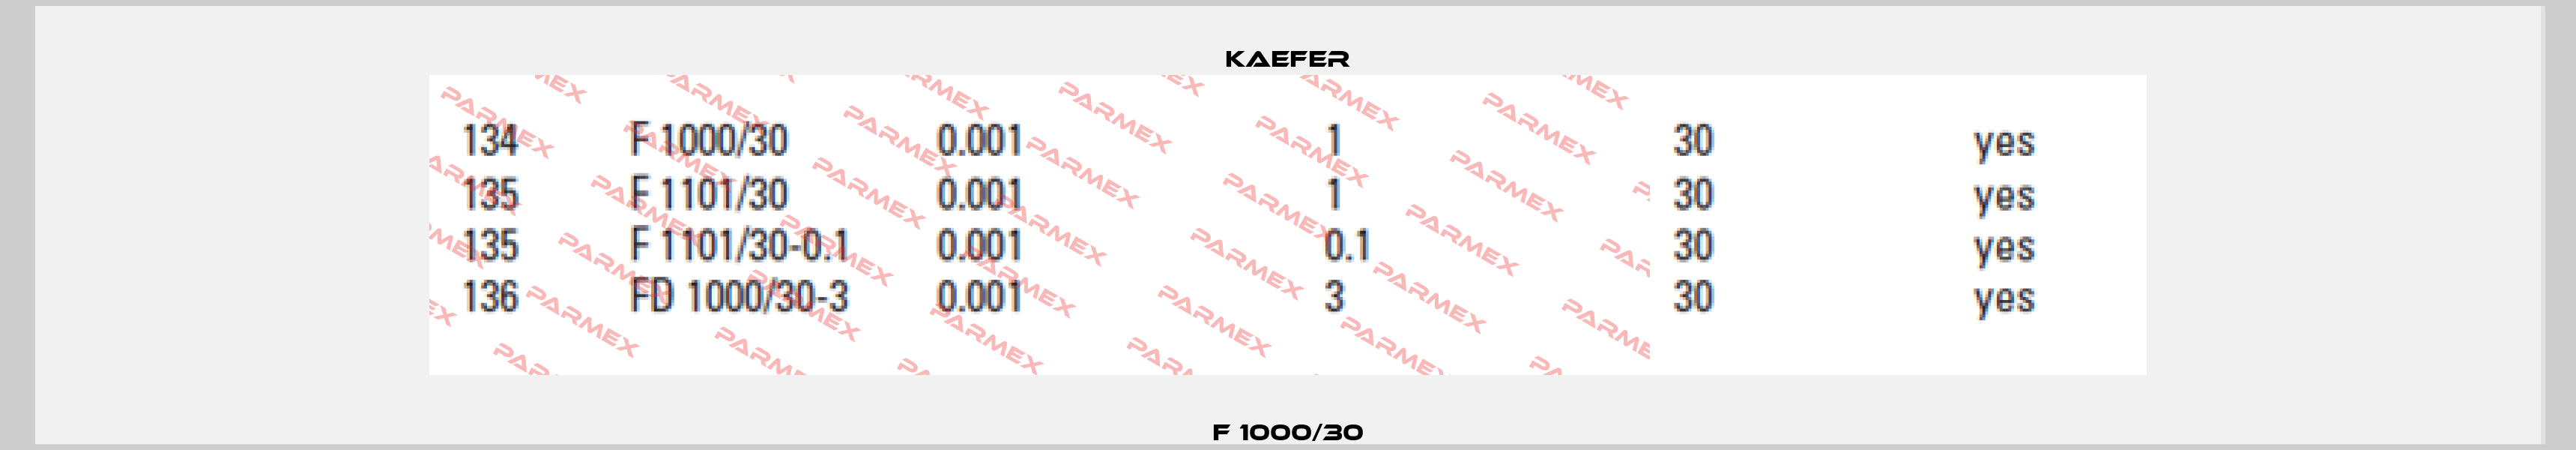 F 1000/30 Kaefer